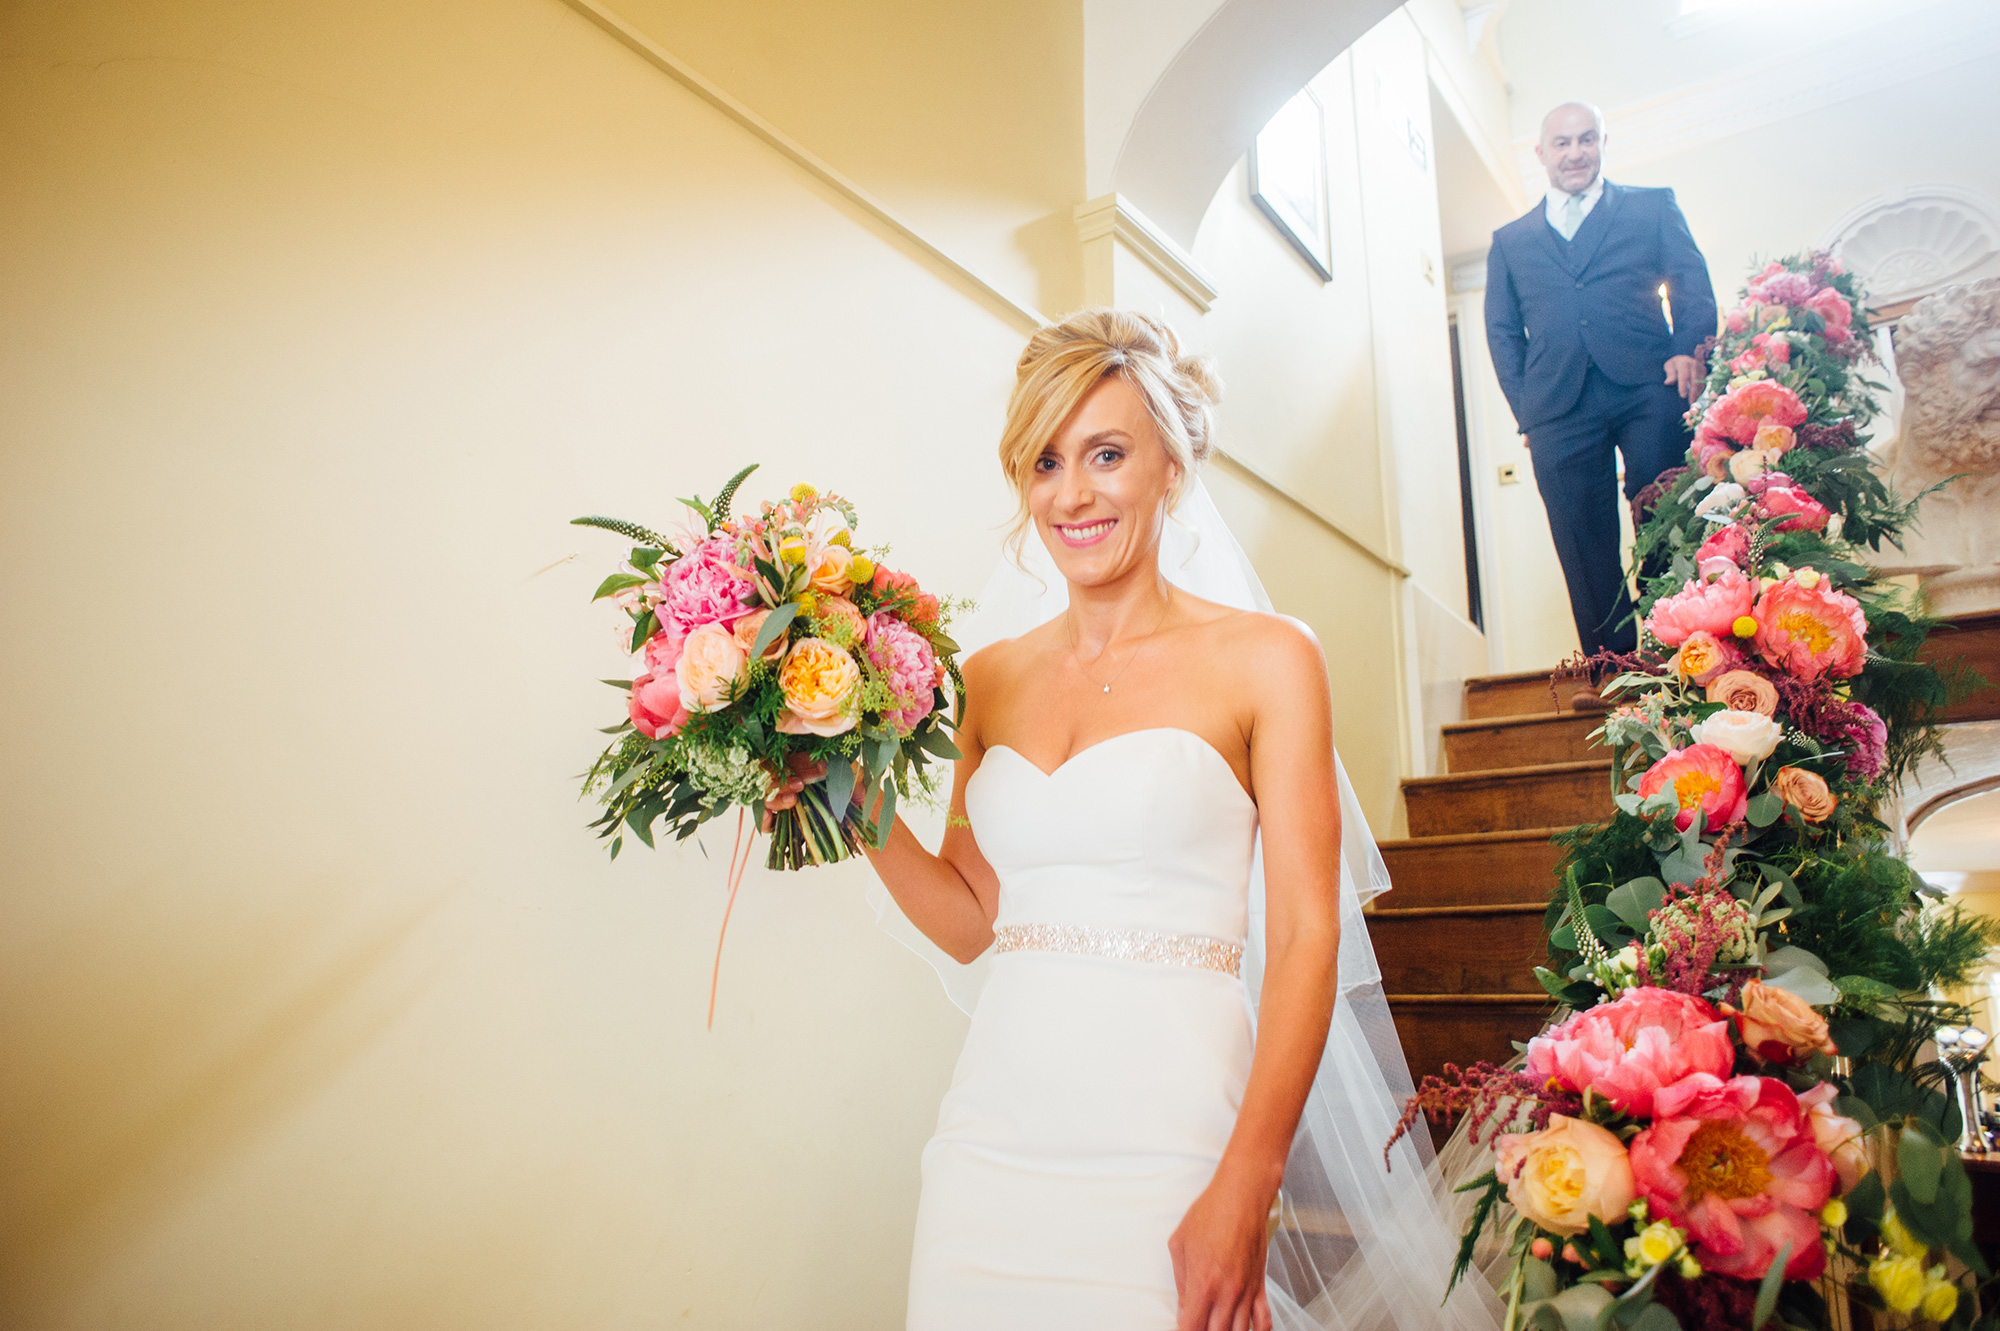 Donna_Nick_Floral-Explosion-Wedding_Jake-Morley-Wedding-Photography_024